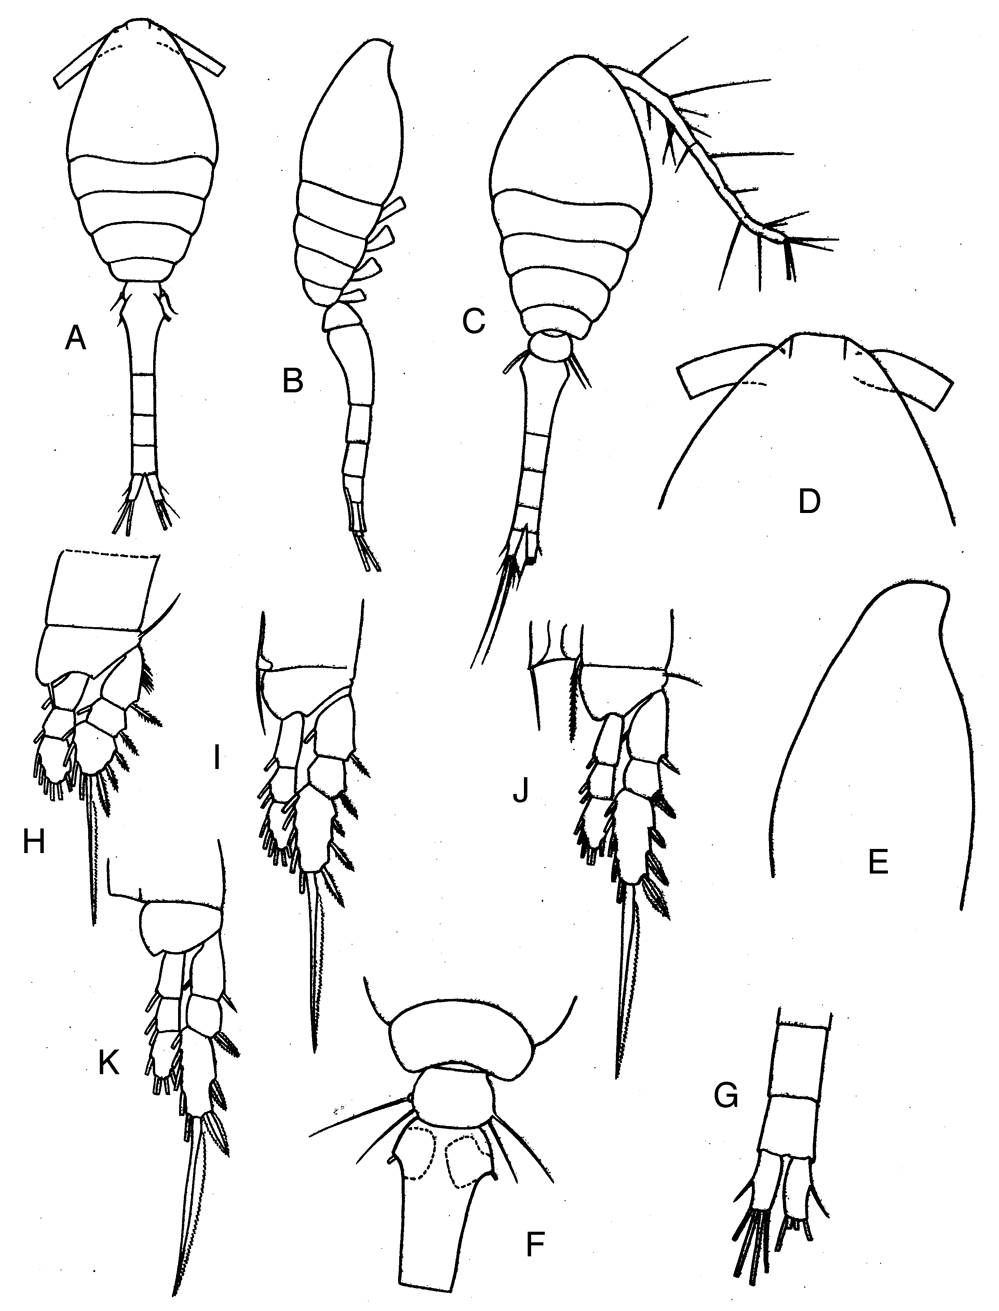 Species Oithona nana - Plate 15 of morphological figures